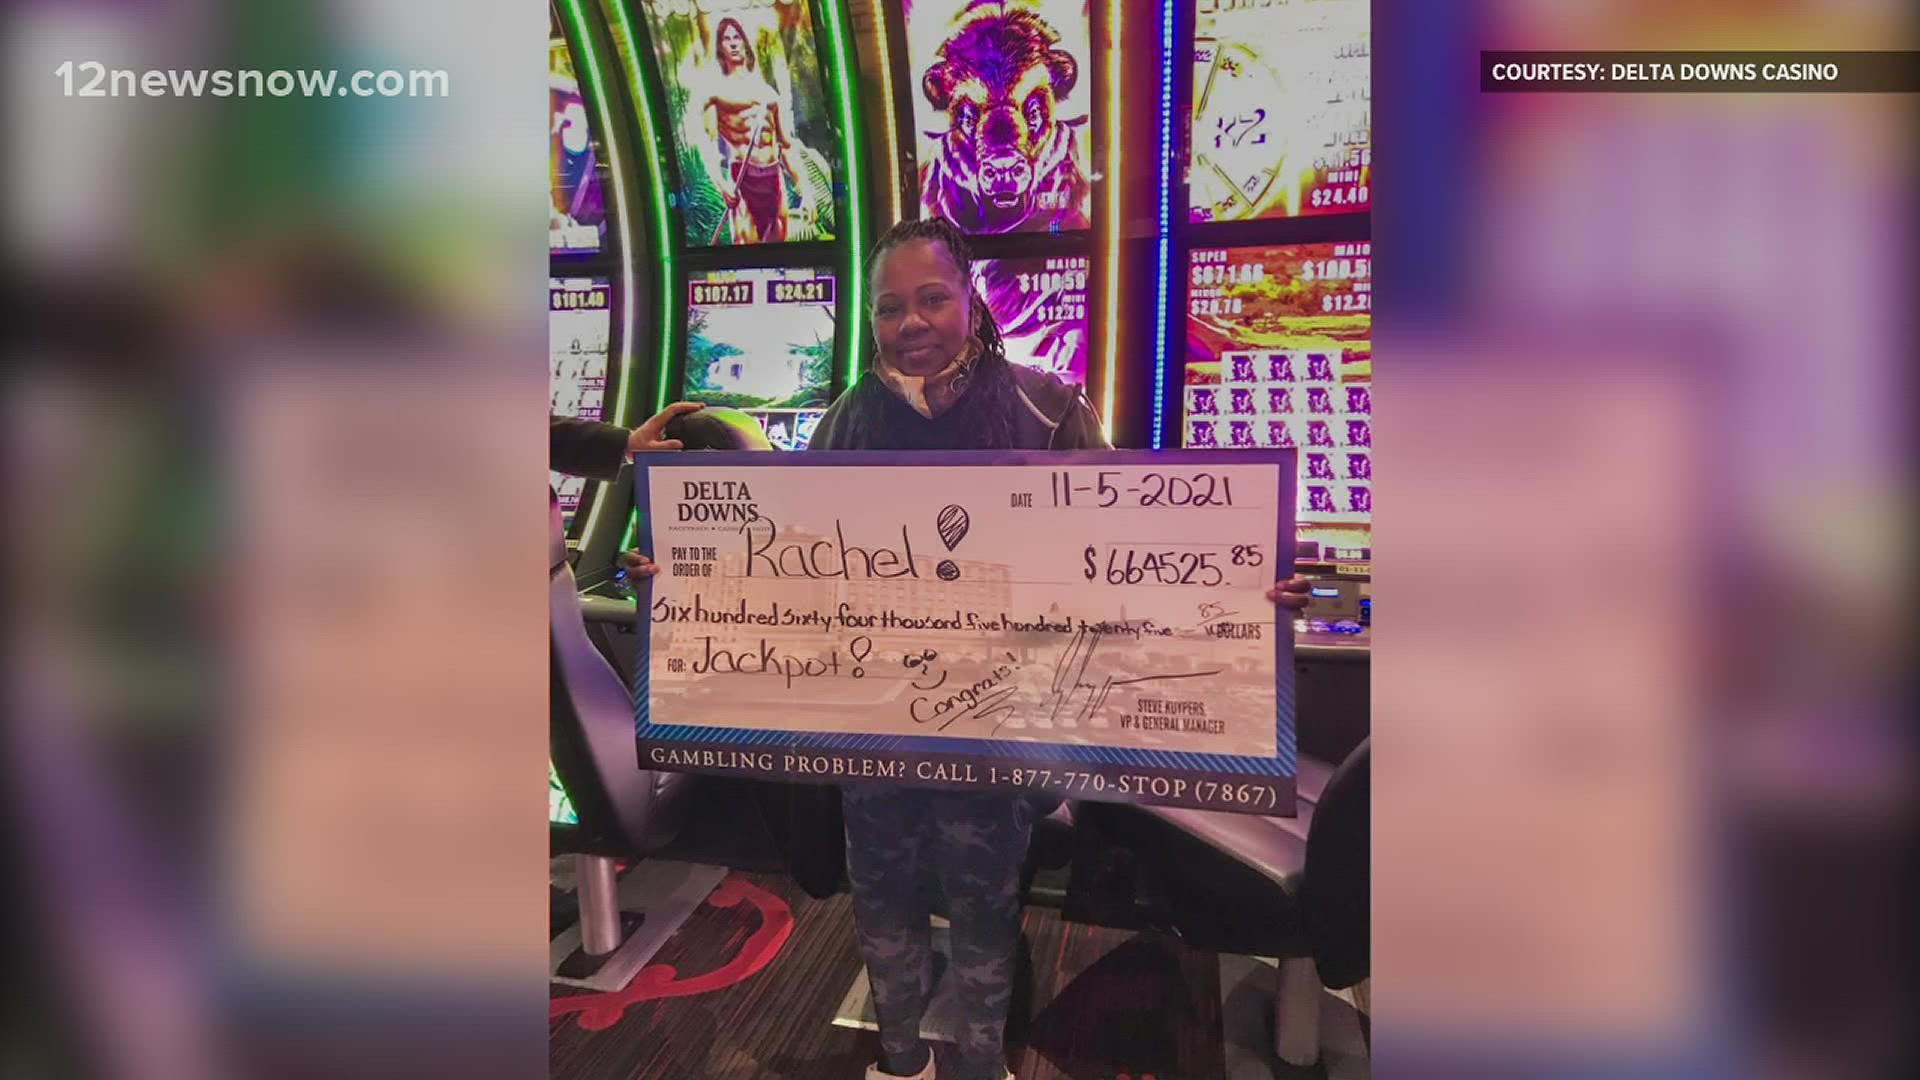 She won the progressive jackpot of $664,525 after betting $3.75.